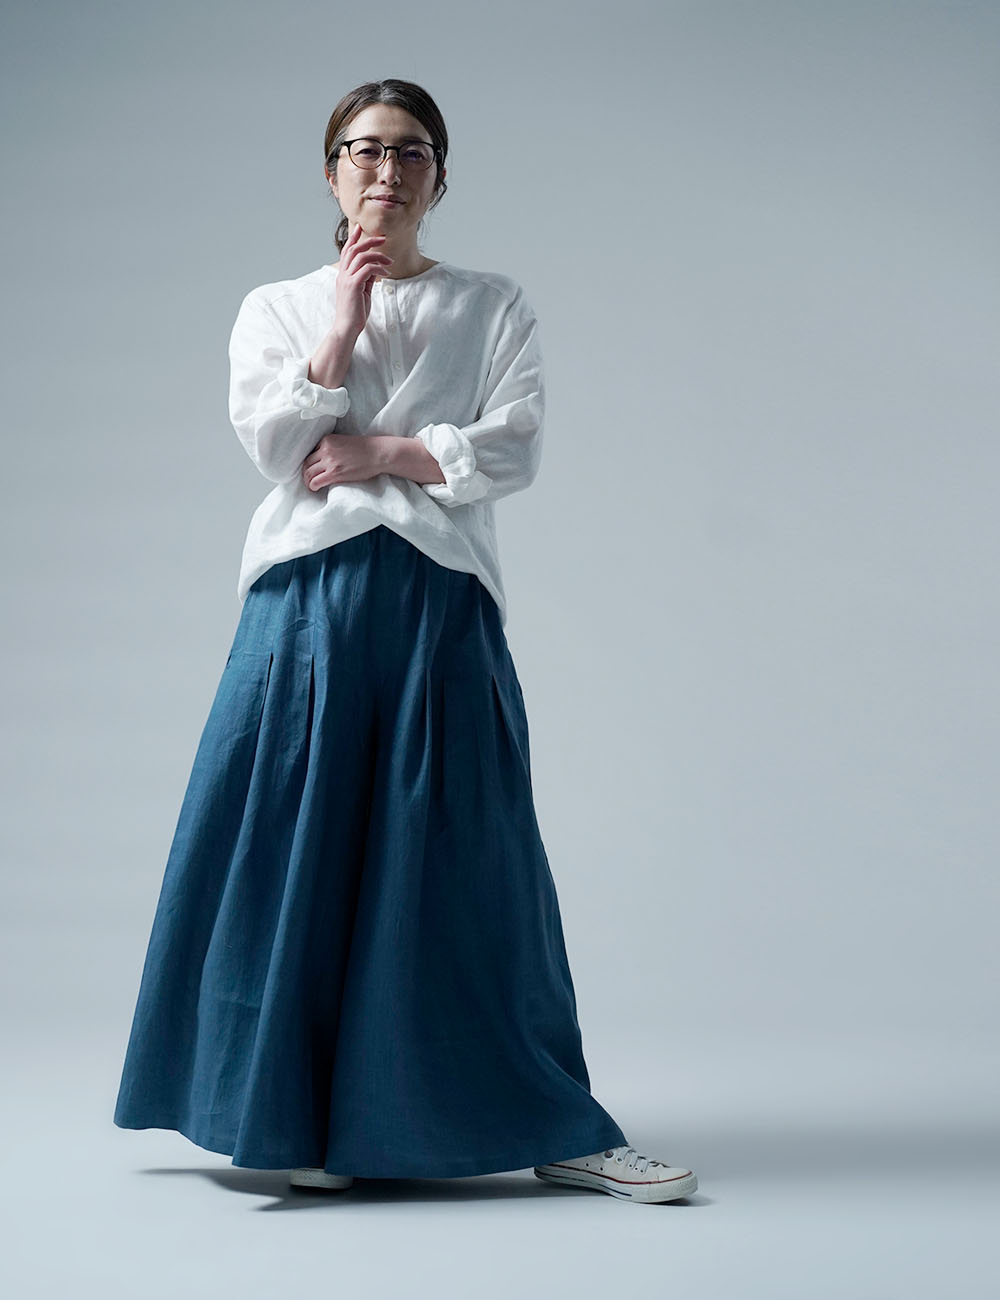 【wafu】Linen Pants 袴(はかま)パンツ / 薄縹(うすはなだ) b002k-ush1